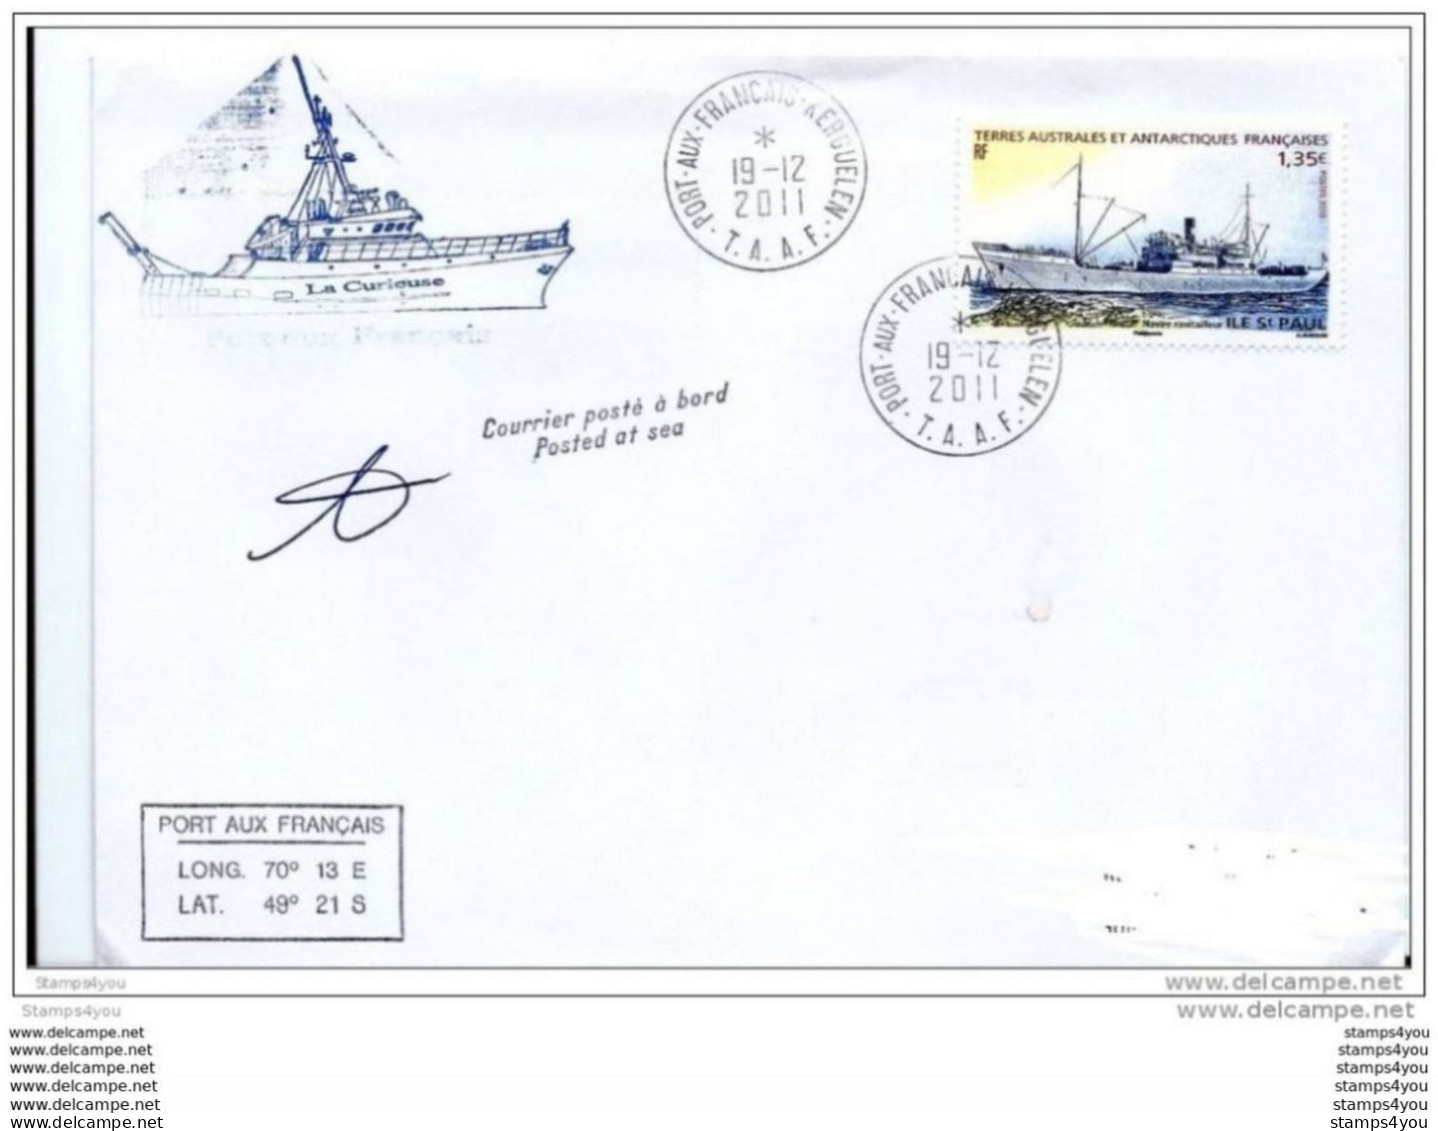 31-58 - Enveloppe  Navire "La Curieuse" Kerguelen 2011 - Polar Ships & Icebreakers